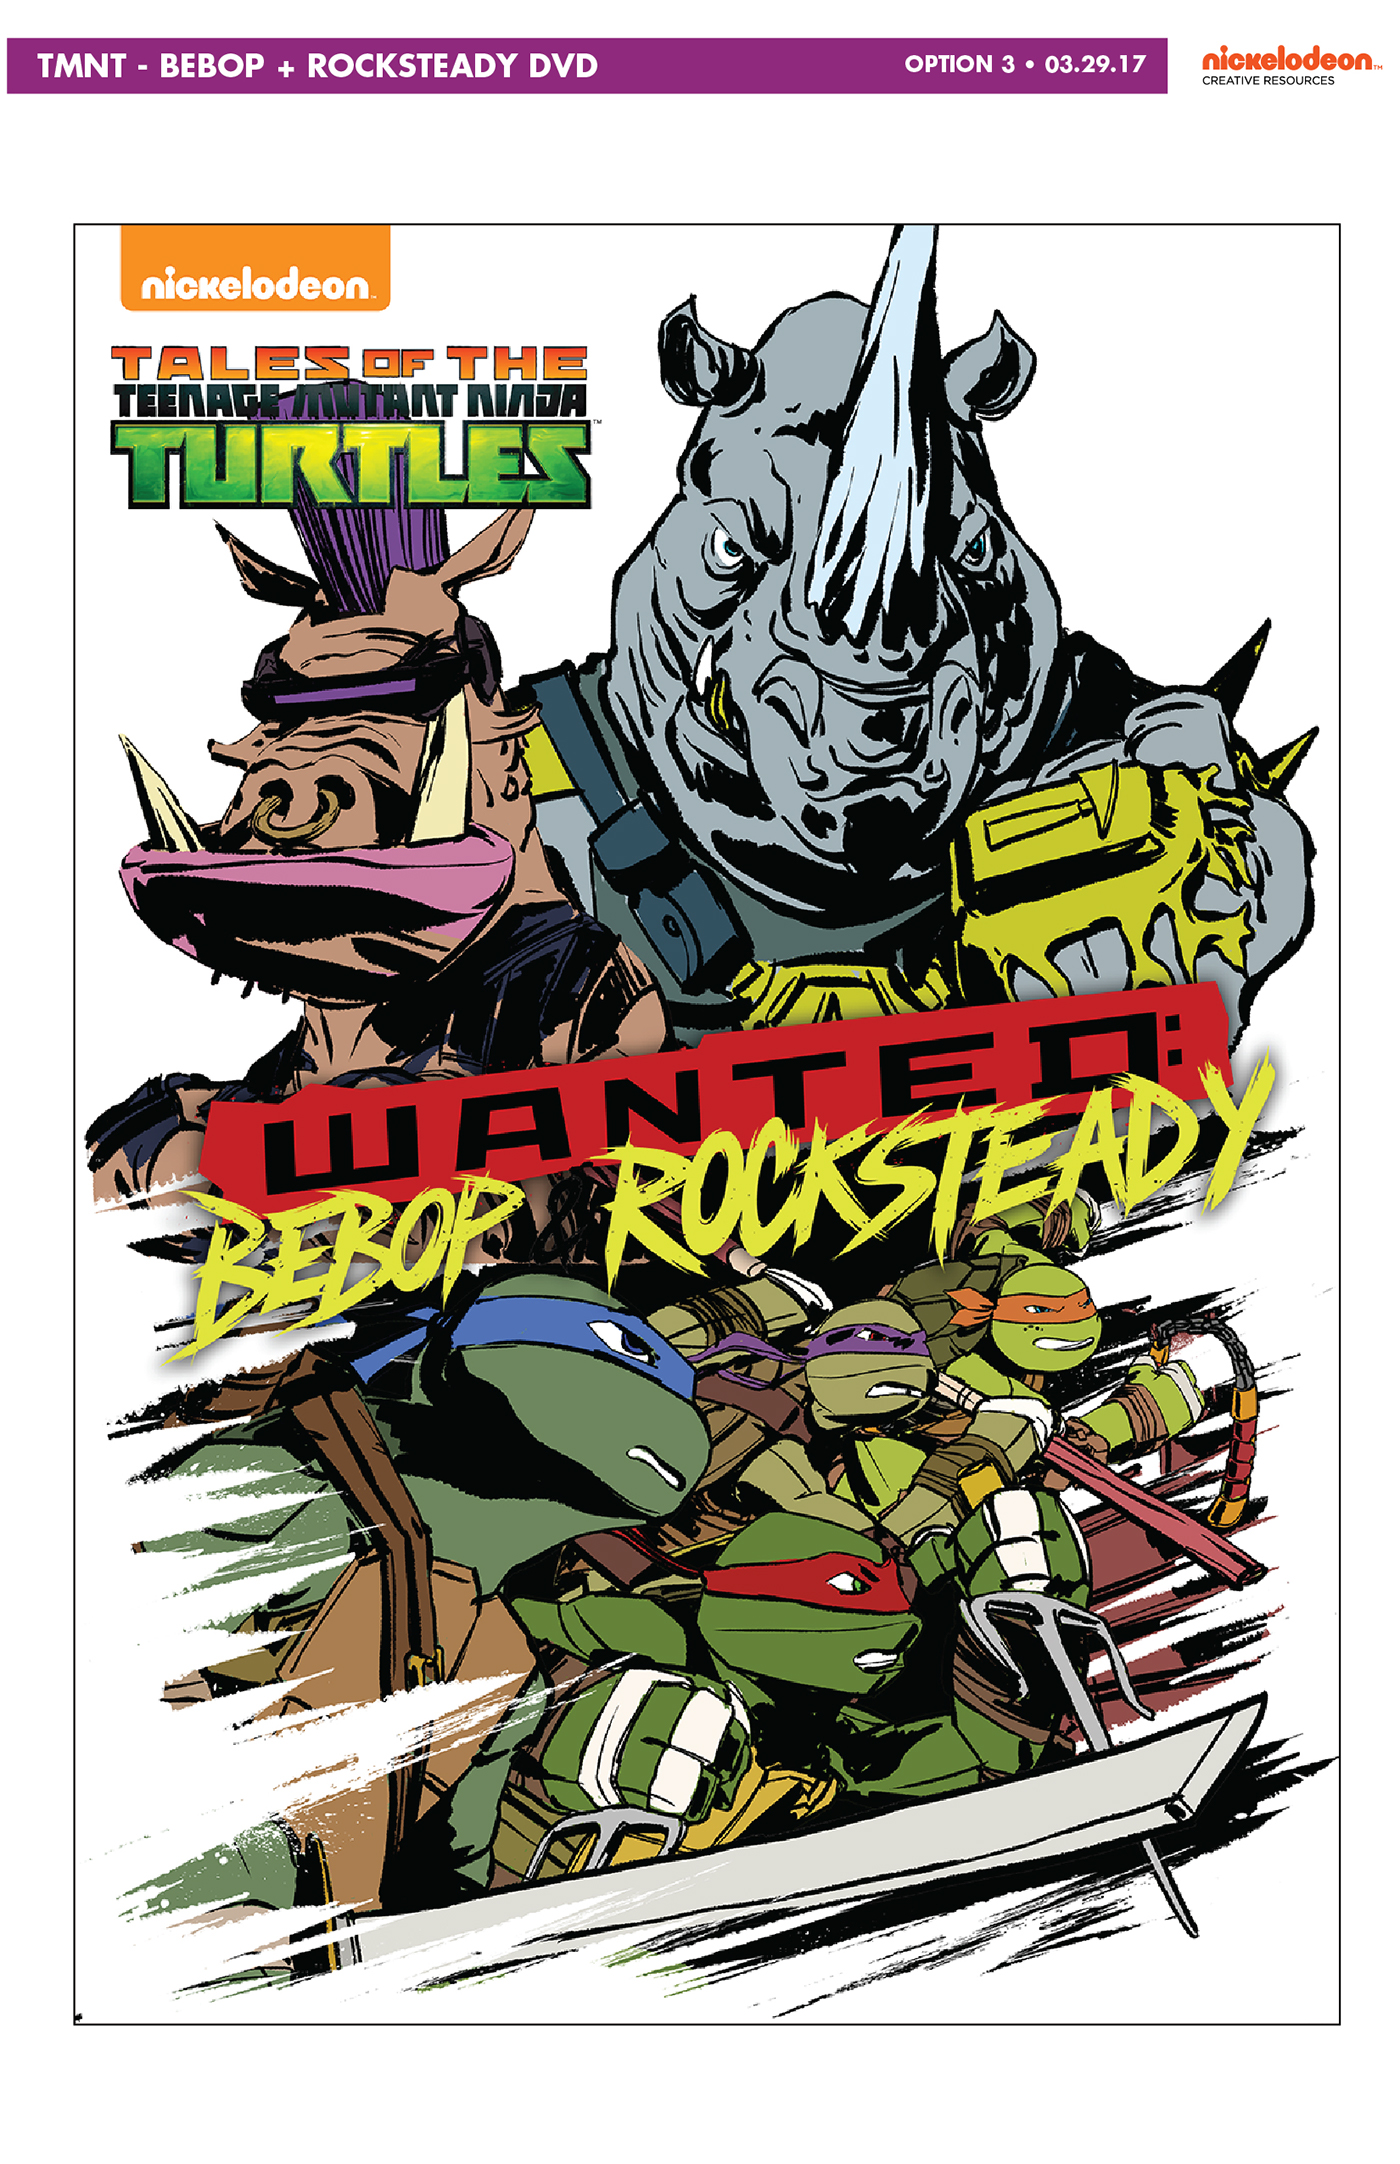 TMNT bebop Rocksteady ice cream kitty DVD Teenage Mutant Ninja Turtles nickelodeon SDCC